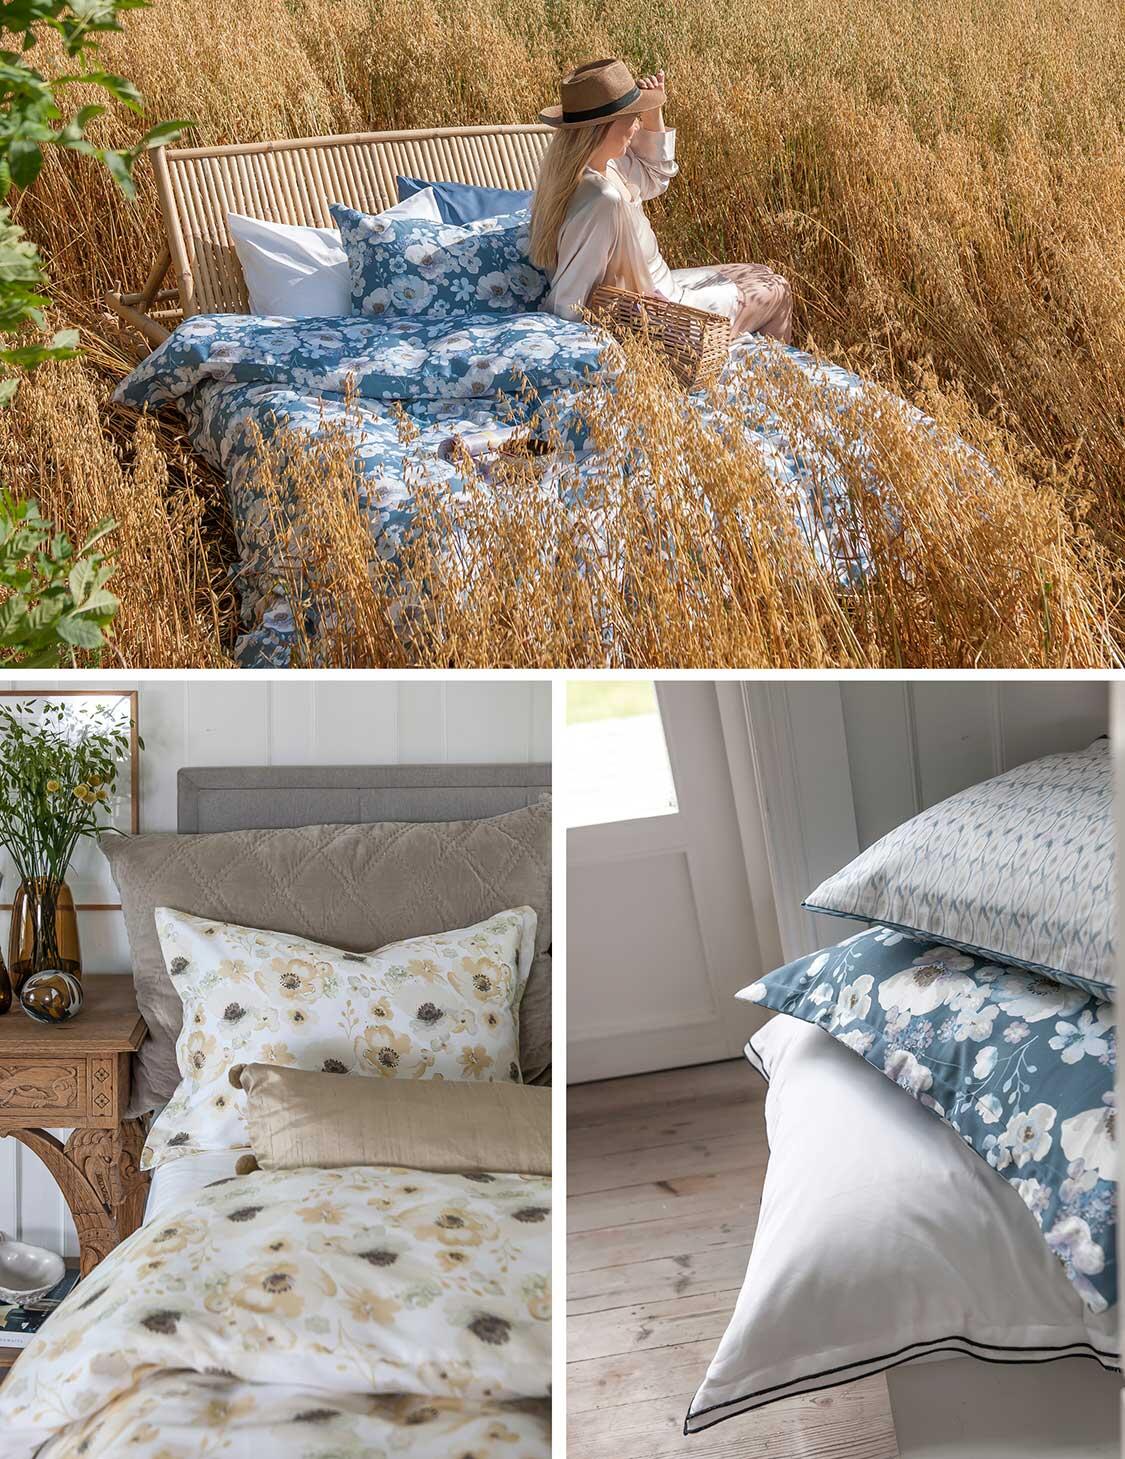 Klassisk sengetøy i fine mønster og farger fra Borås Cotton